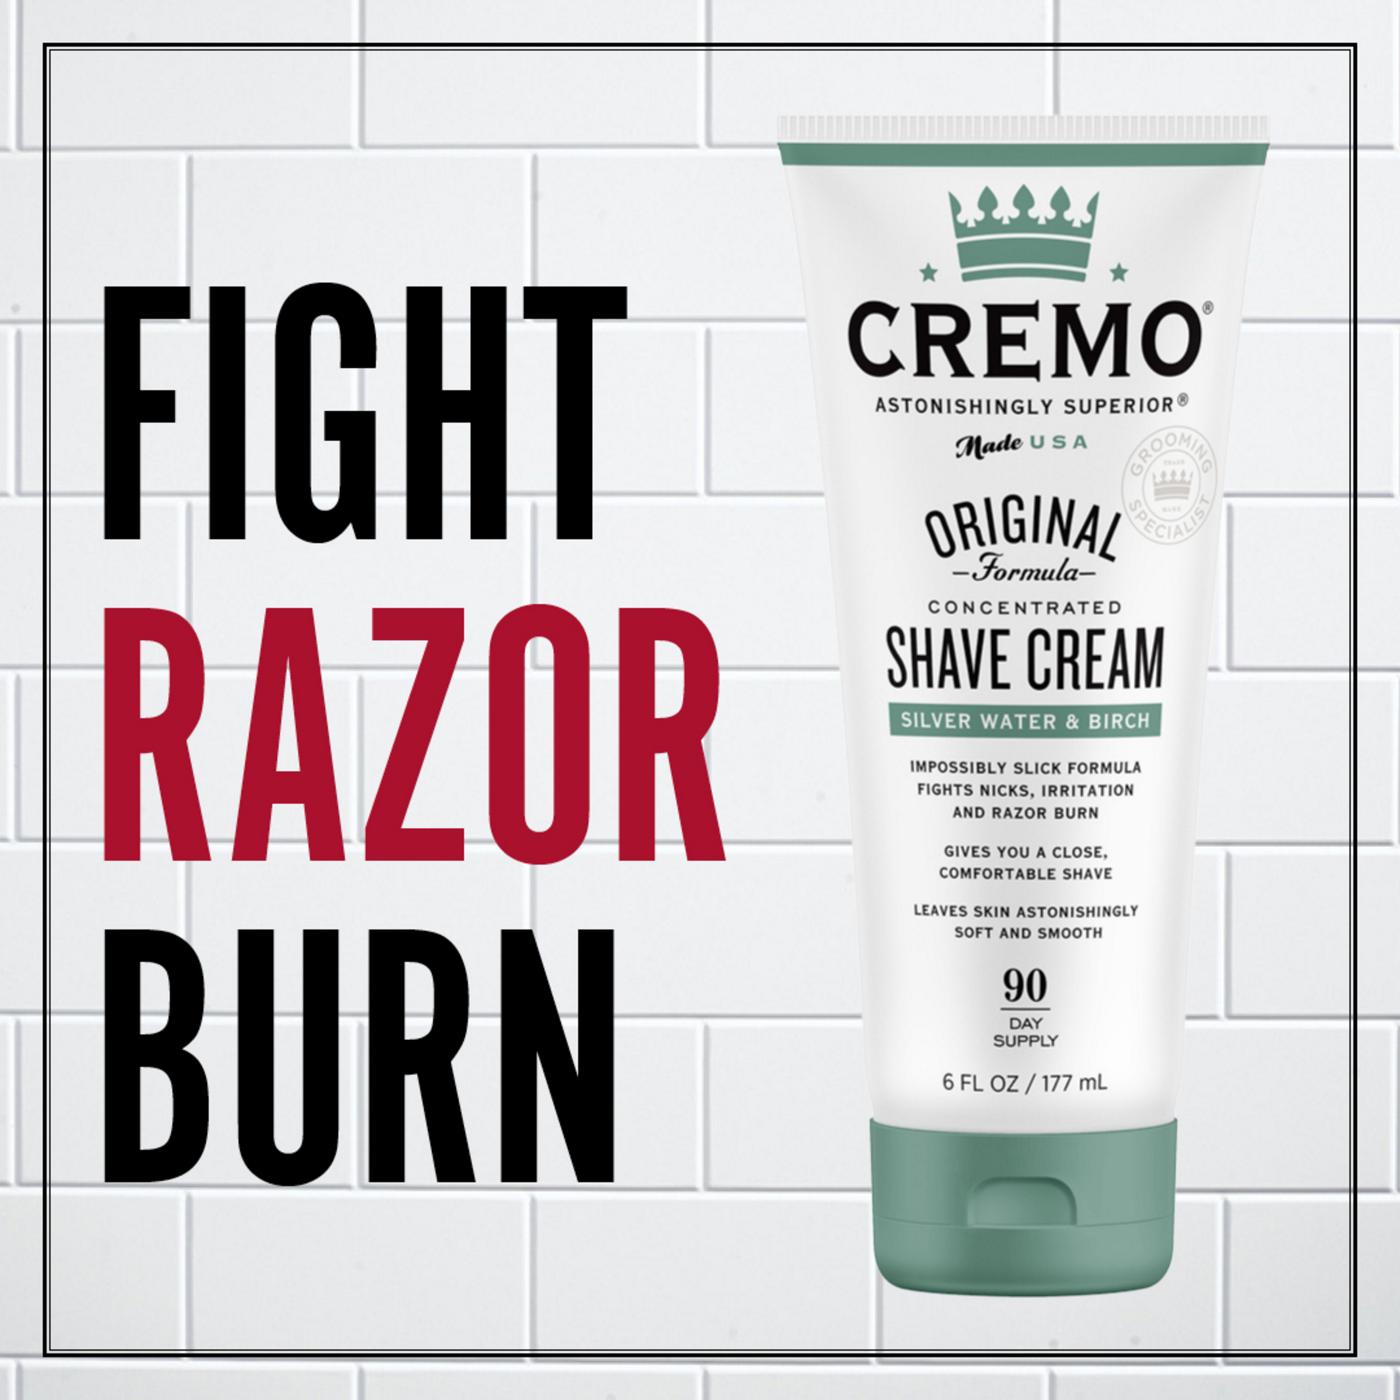 Cremo Shave Cream - Silver Water & Birch; image 4 of 7